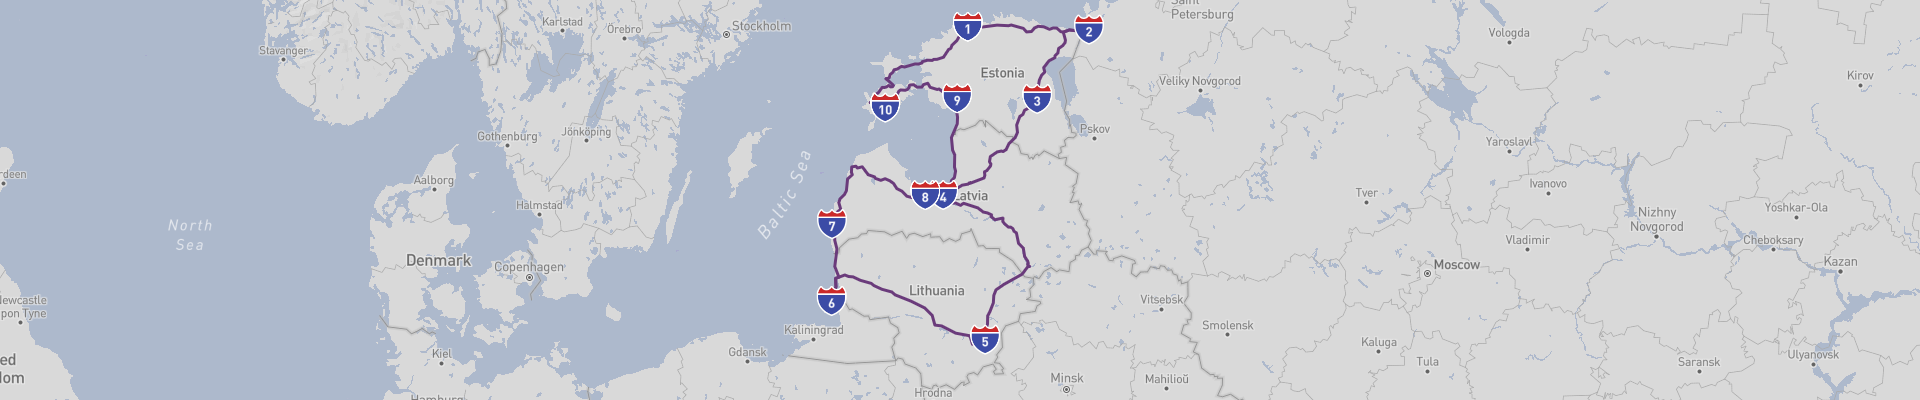 Itinéraire Baltic States 